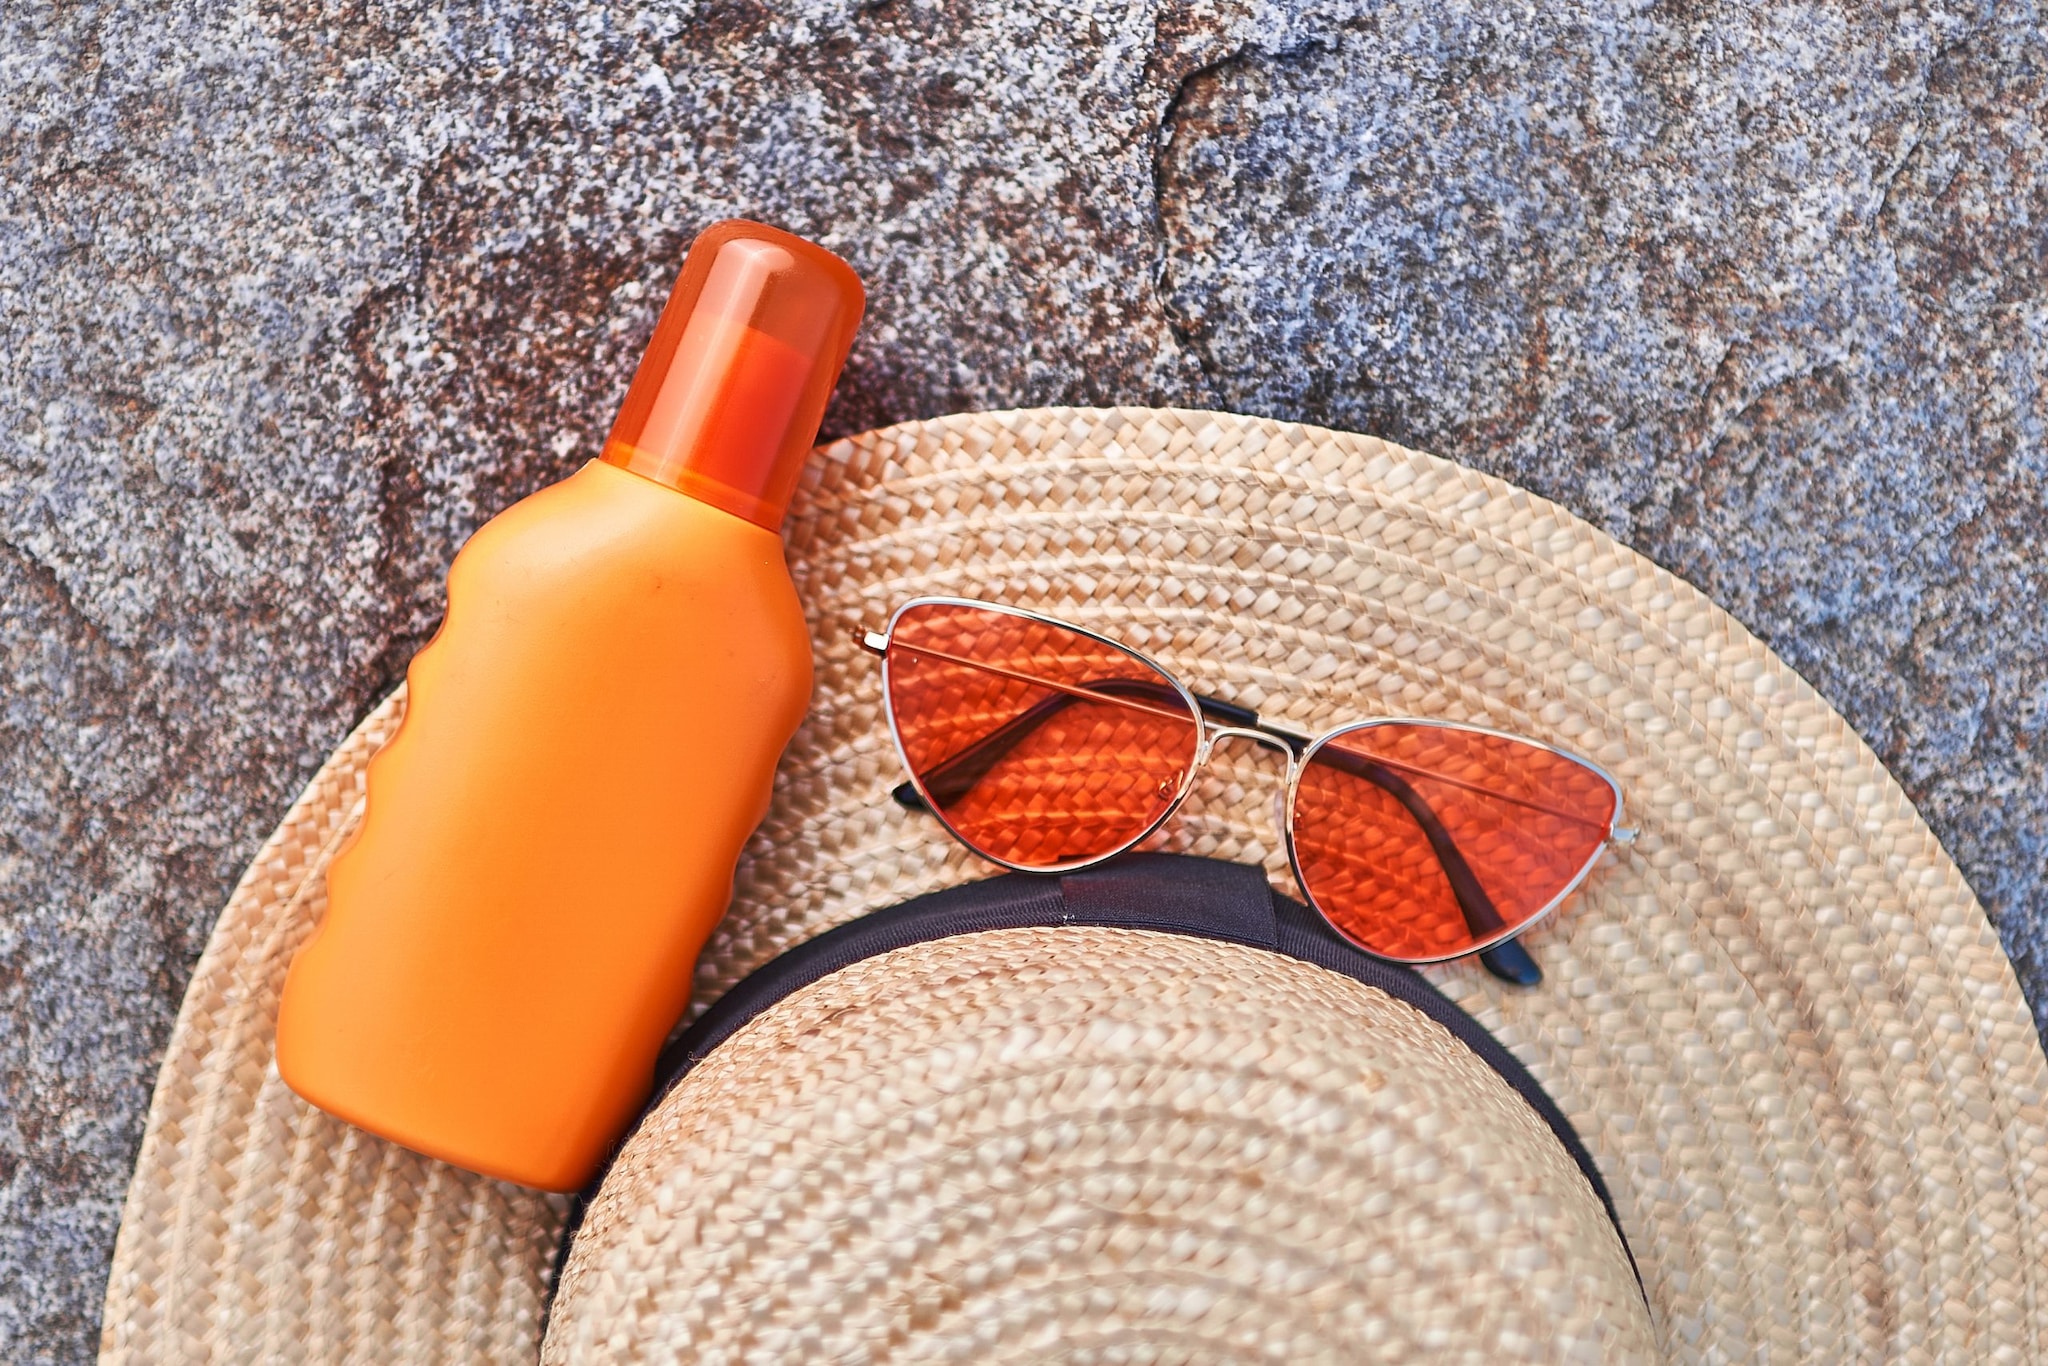 Wide-brim hat, sun glasses, and sunscreen bottle.